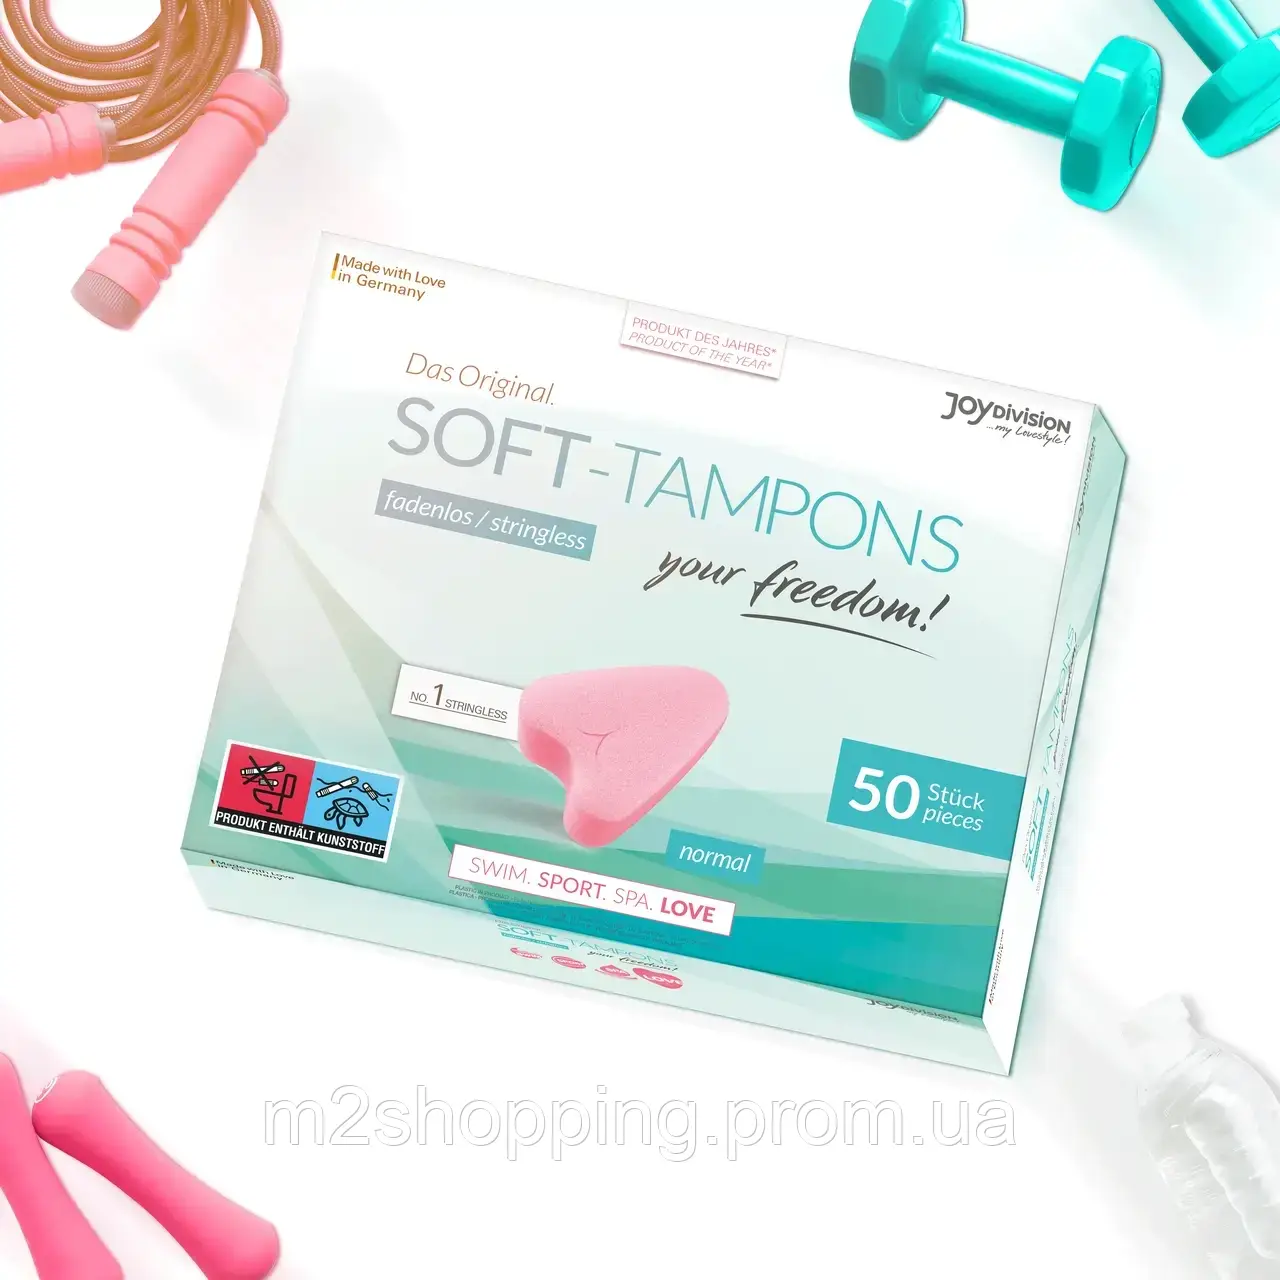 Жіночі гігієнічні м'які тампони - Soft-Tampons NORMAL JoyDivision, 10 шт.